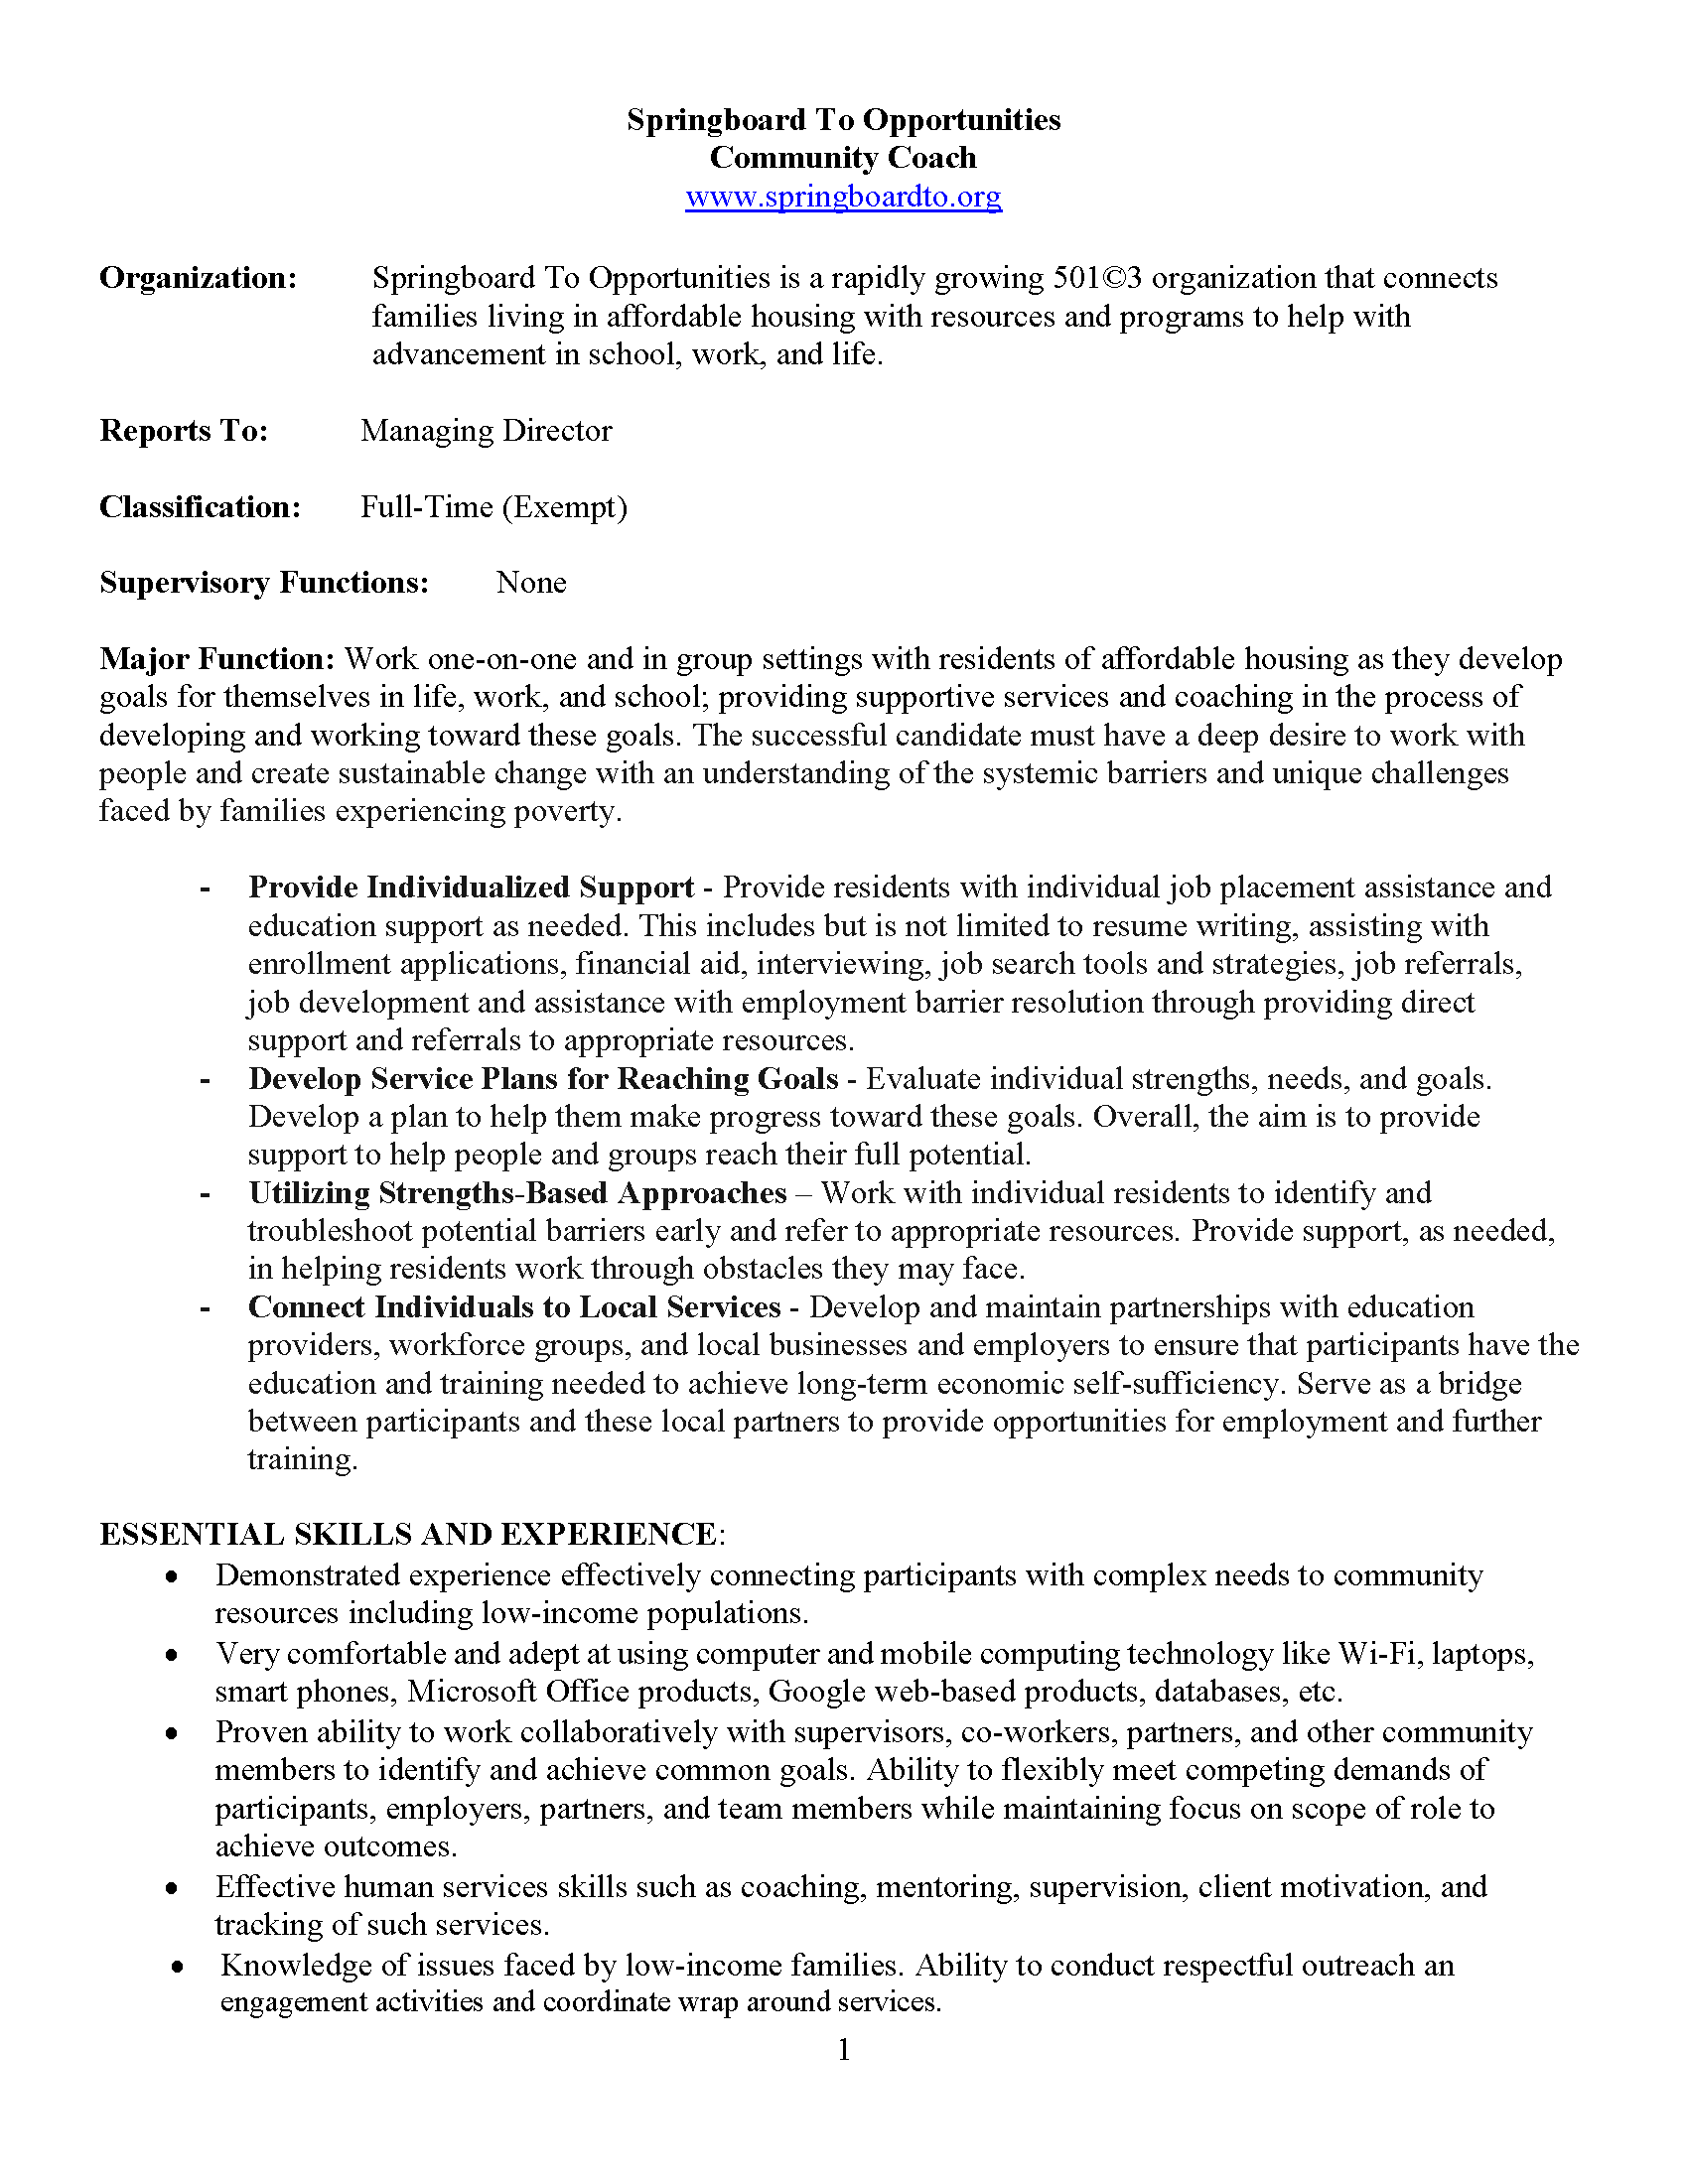 Community Coach Job Description